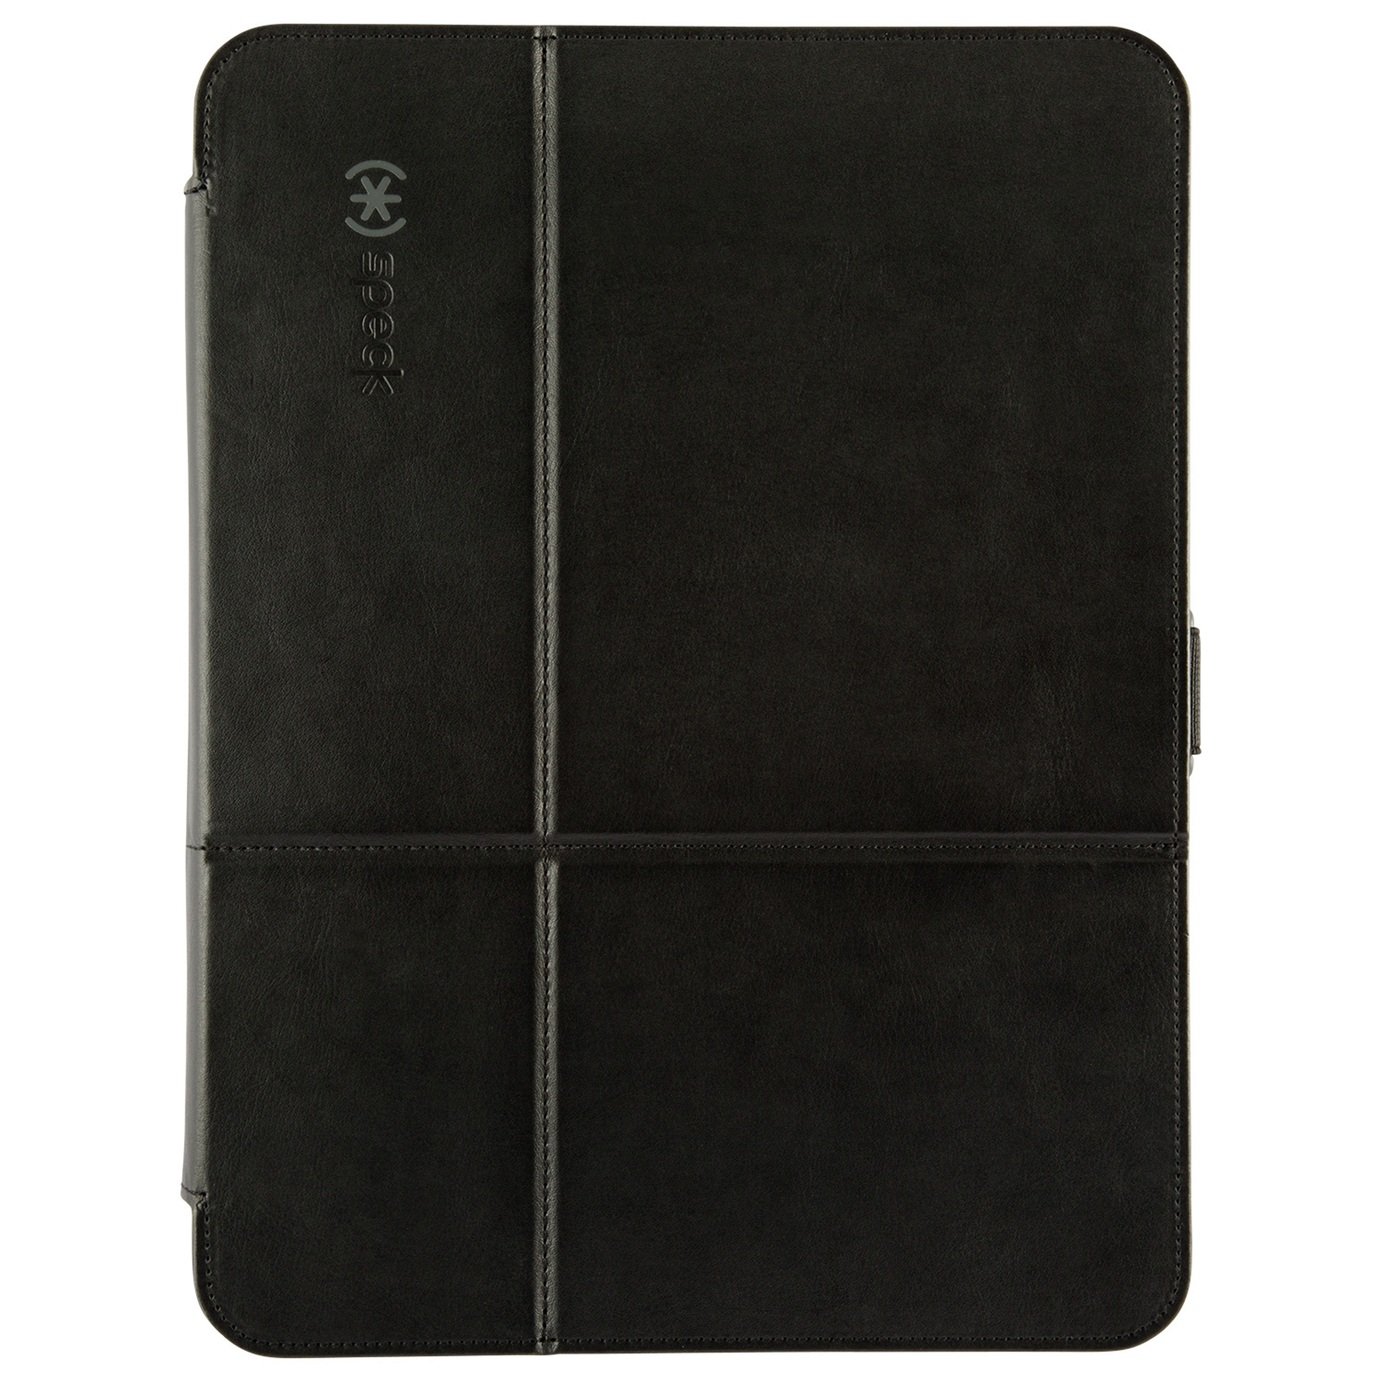 Speck Stylefolio 9-10.5 Inch Universal Tablet Case - Black